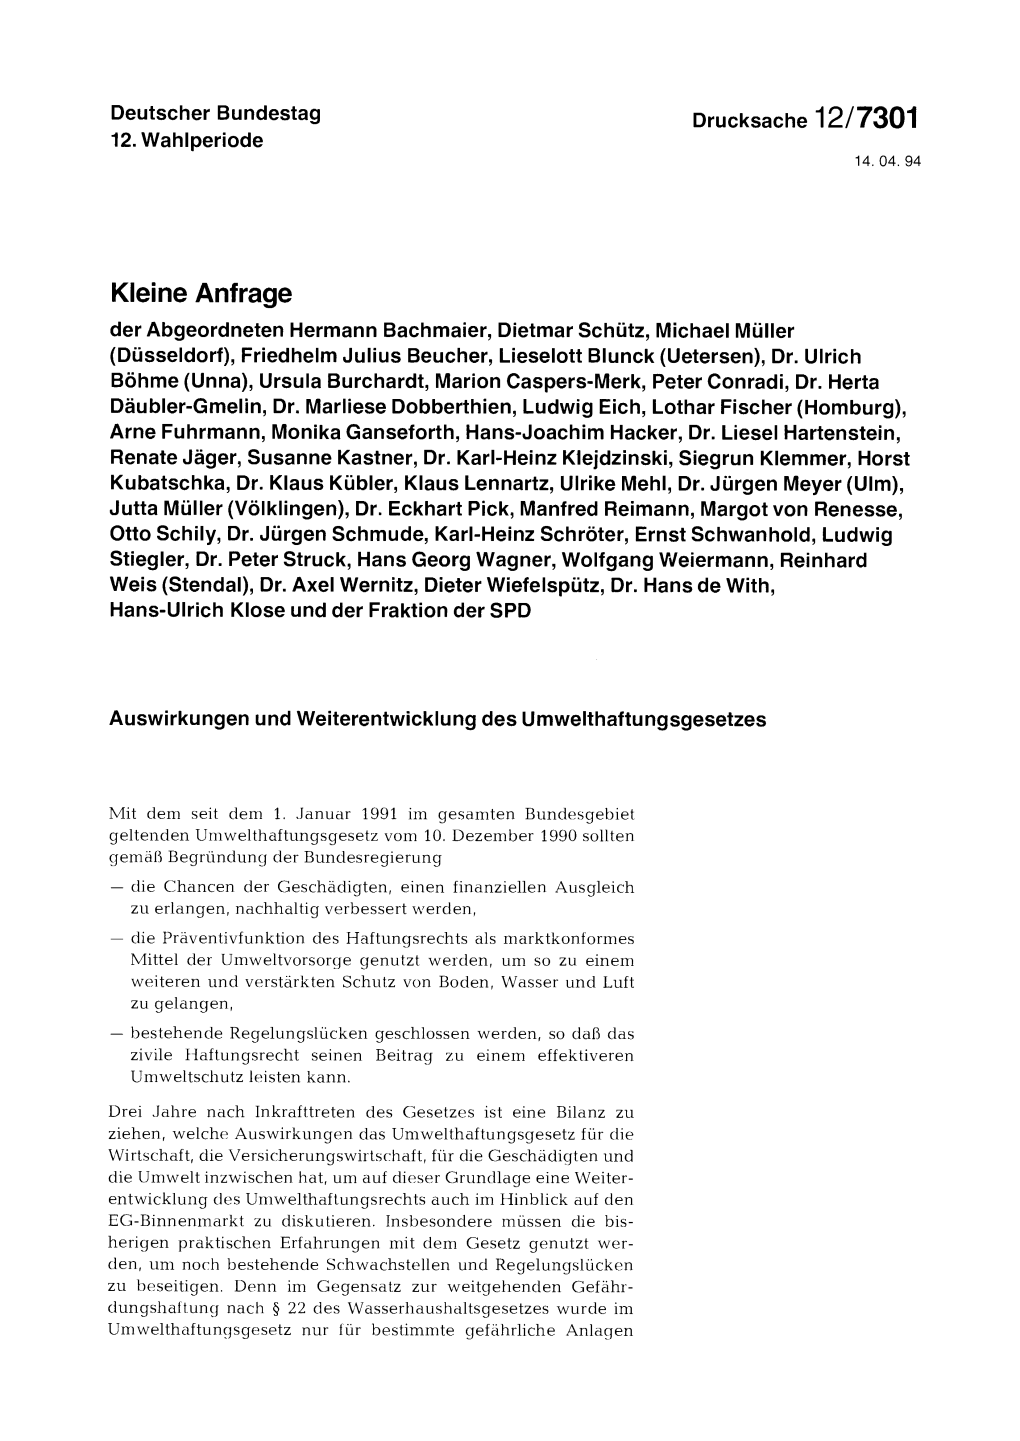 Kleine Anfrage Der Abgeordneten Hermann Bachmaier, Dietmar Schütz, Michael Müller (Düsseldorf), Friedhelm Julius Beucher, Lieselott Blunck (Uetersen), Dr